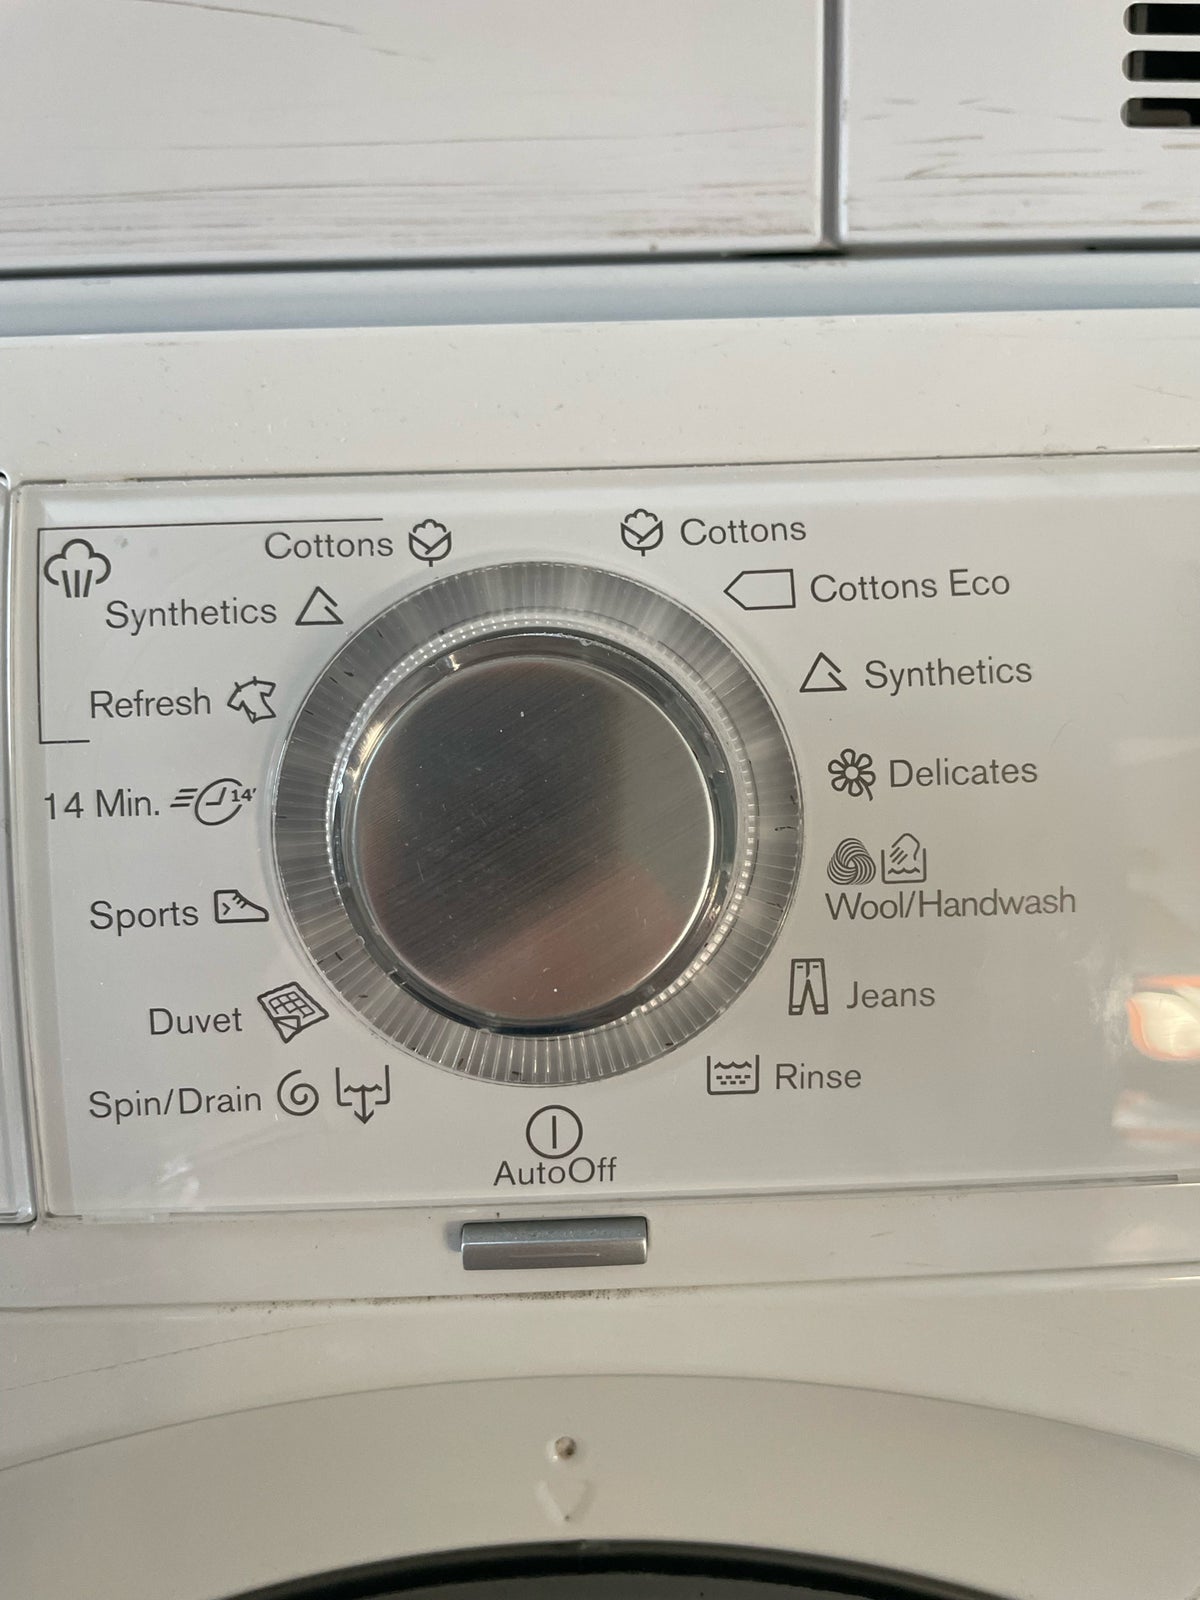 Electrolux vaskemaskine, ewf1687hdw, frontbetjent